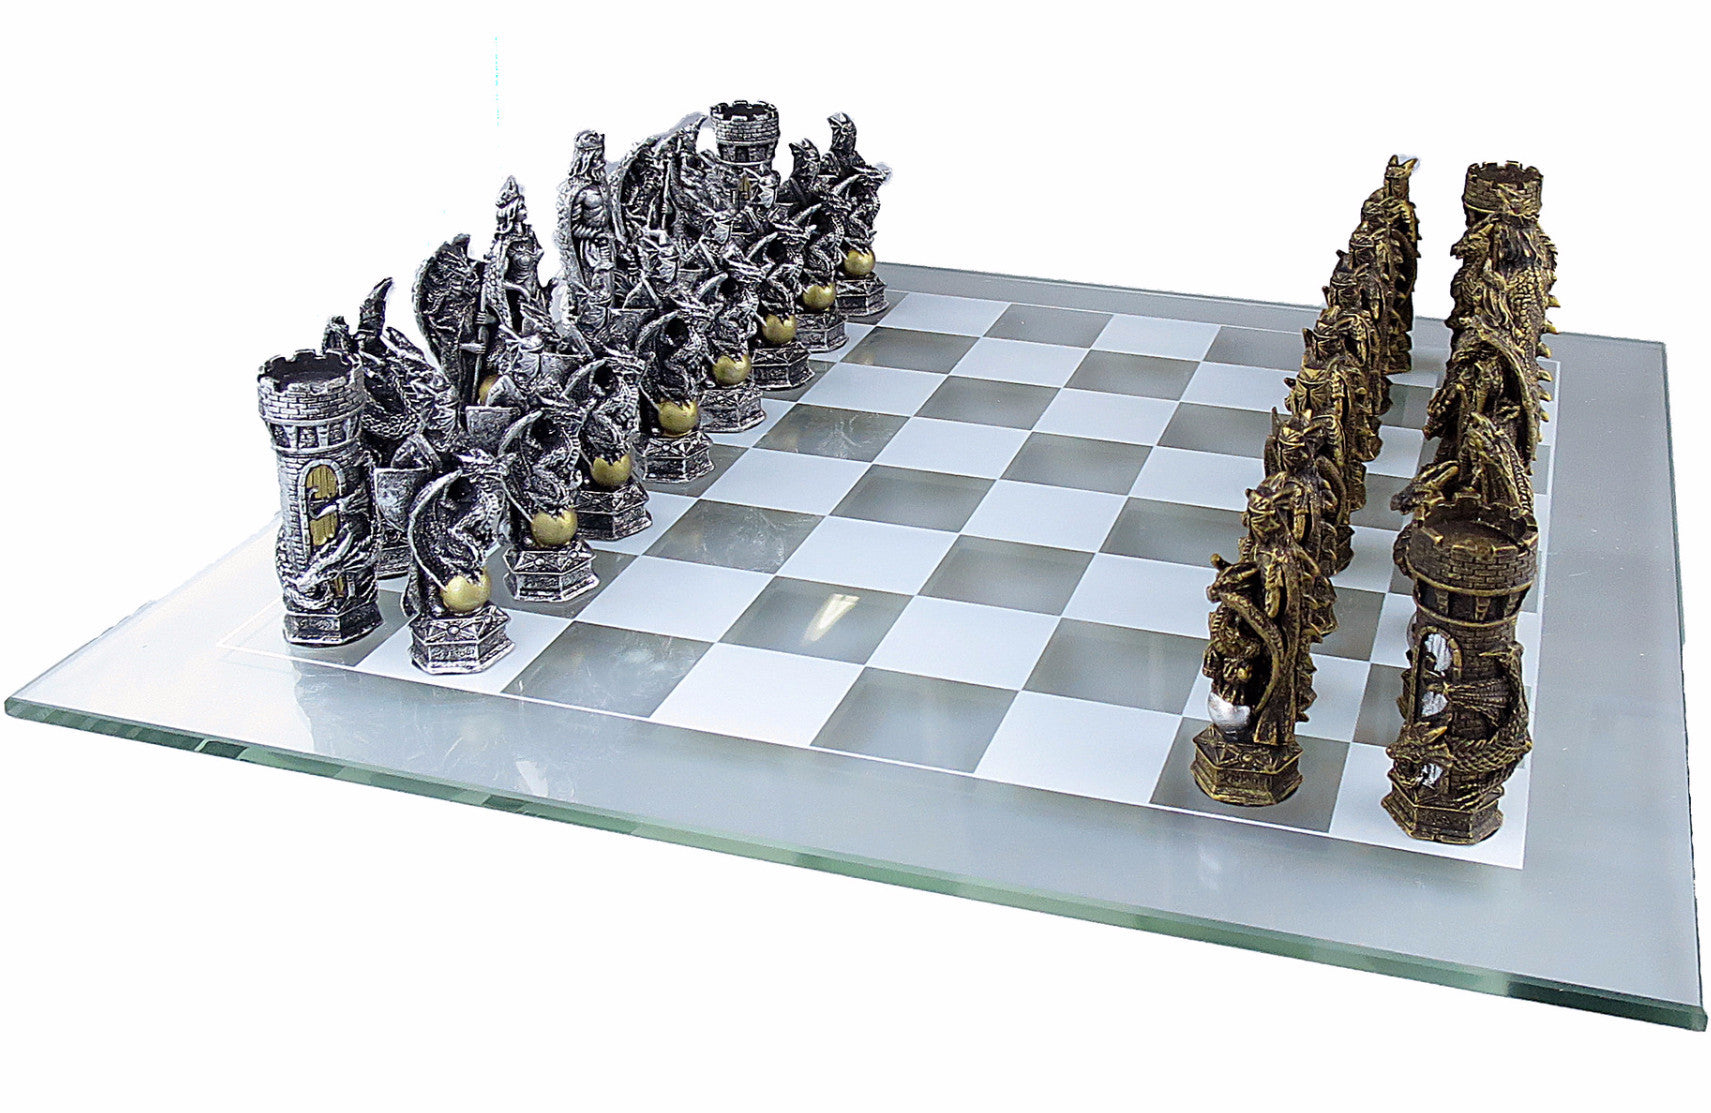 King Arthur Chess Set